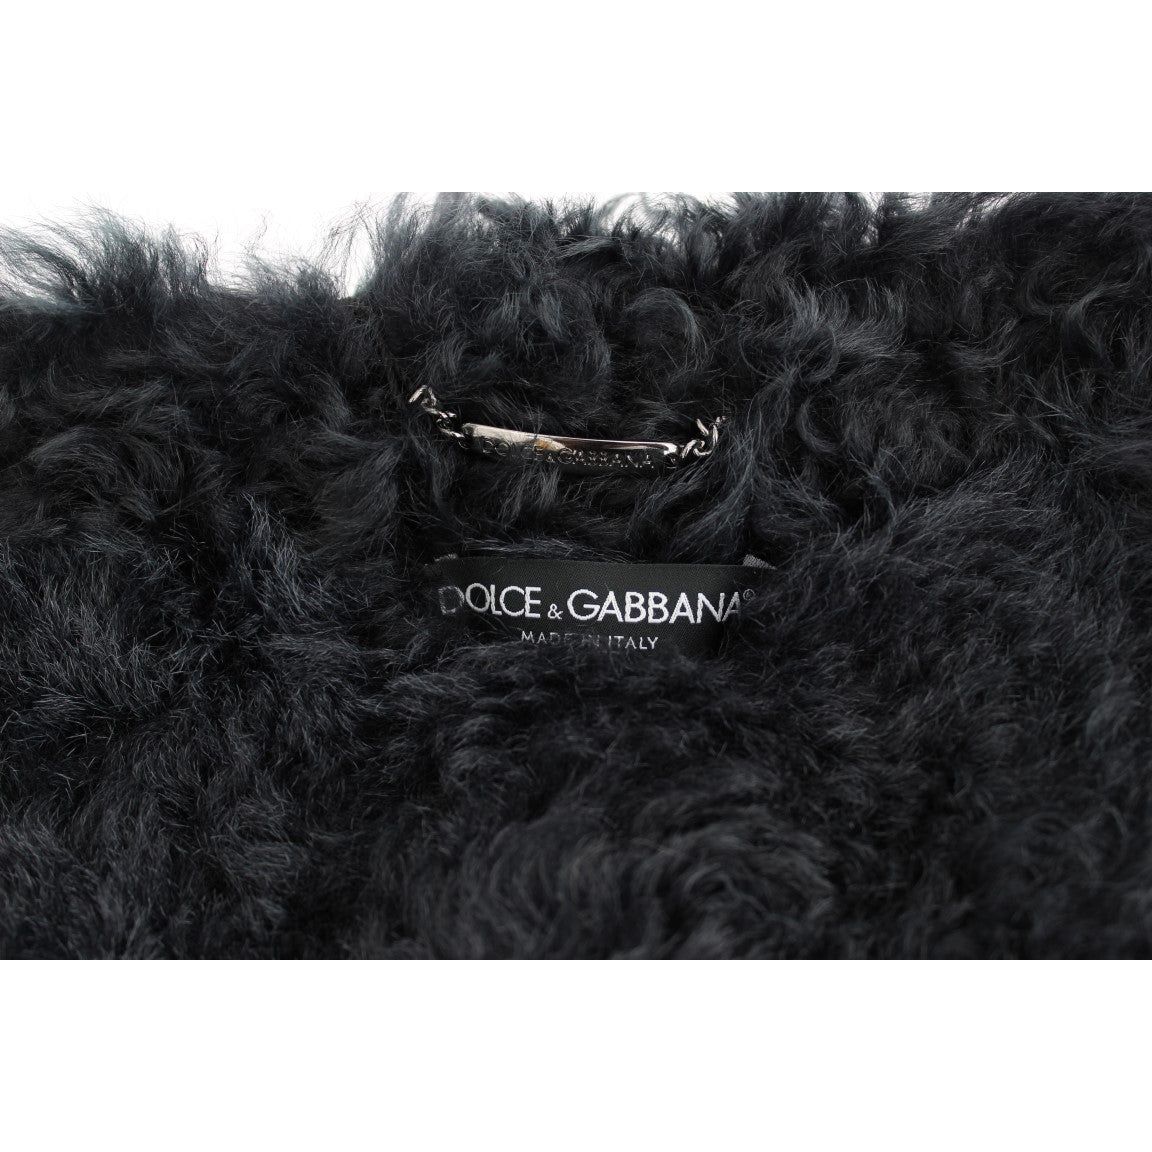 Dolce & Gabbana Exquisite Shearling Coat Jacket black-goat-fur-shearling-long-jacket-coat 62390-black-goat-fur-shearling-long-jacket-coat-10.jpg